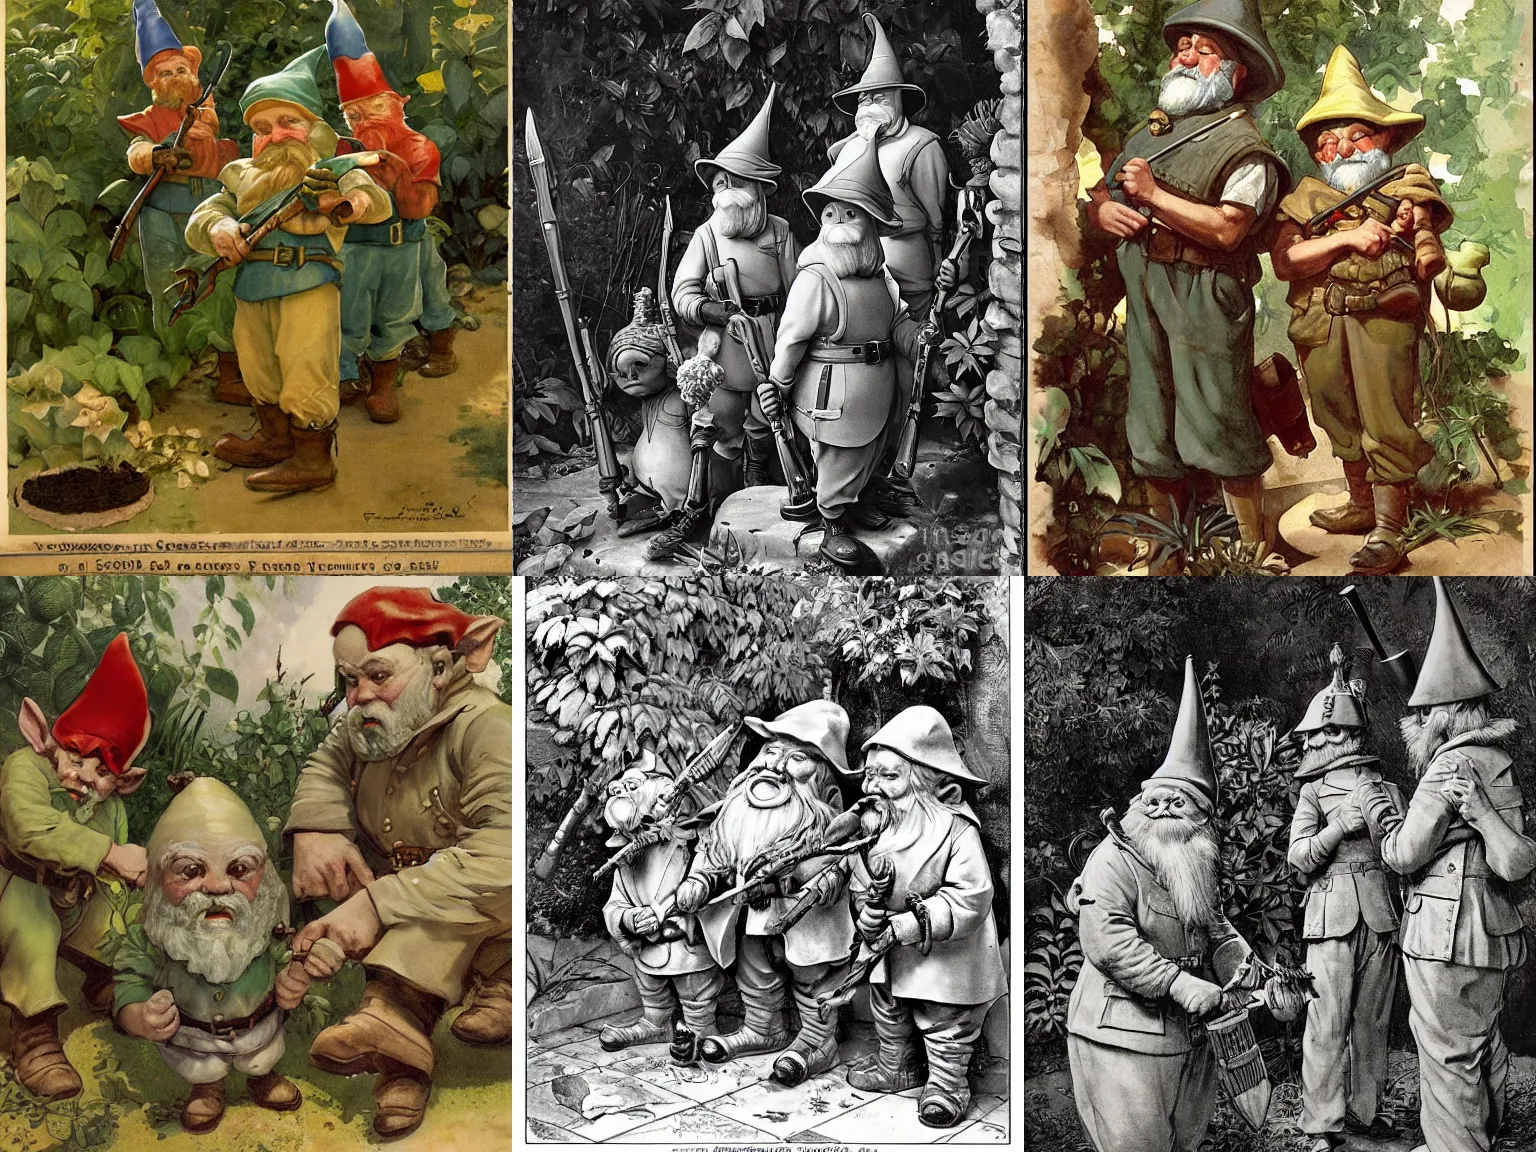 Prompt: Garden gnomes preparing for war, color, high quality, by Frank Leyendecker, by Jospeh Kernan, by Frederick Sands Brunner.